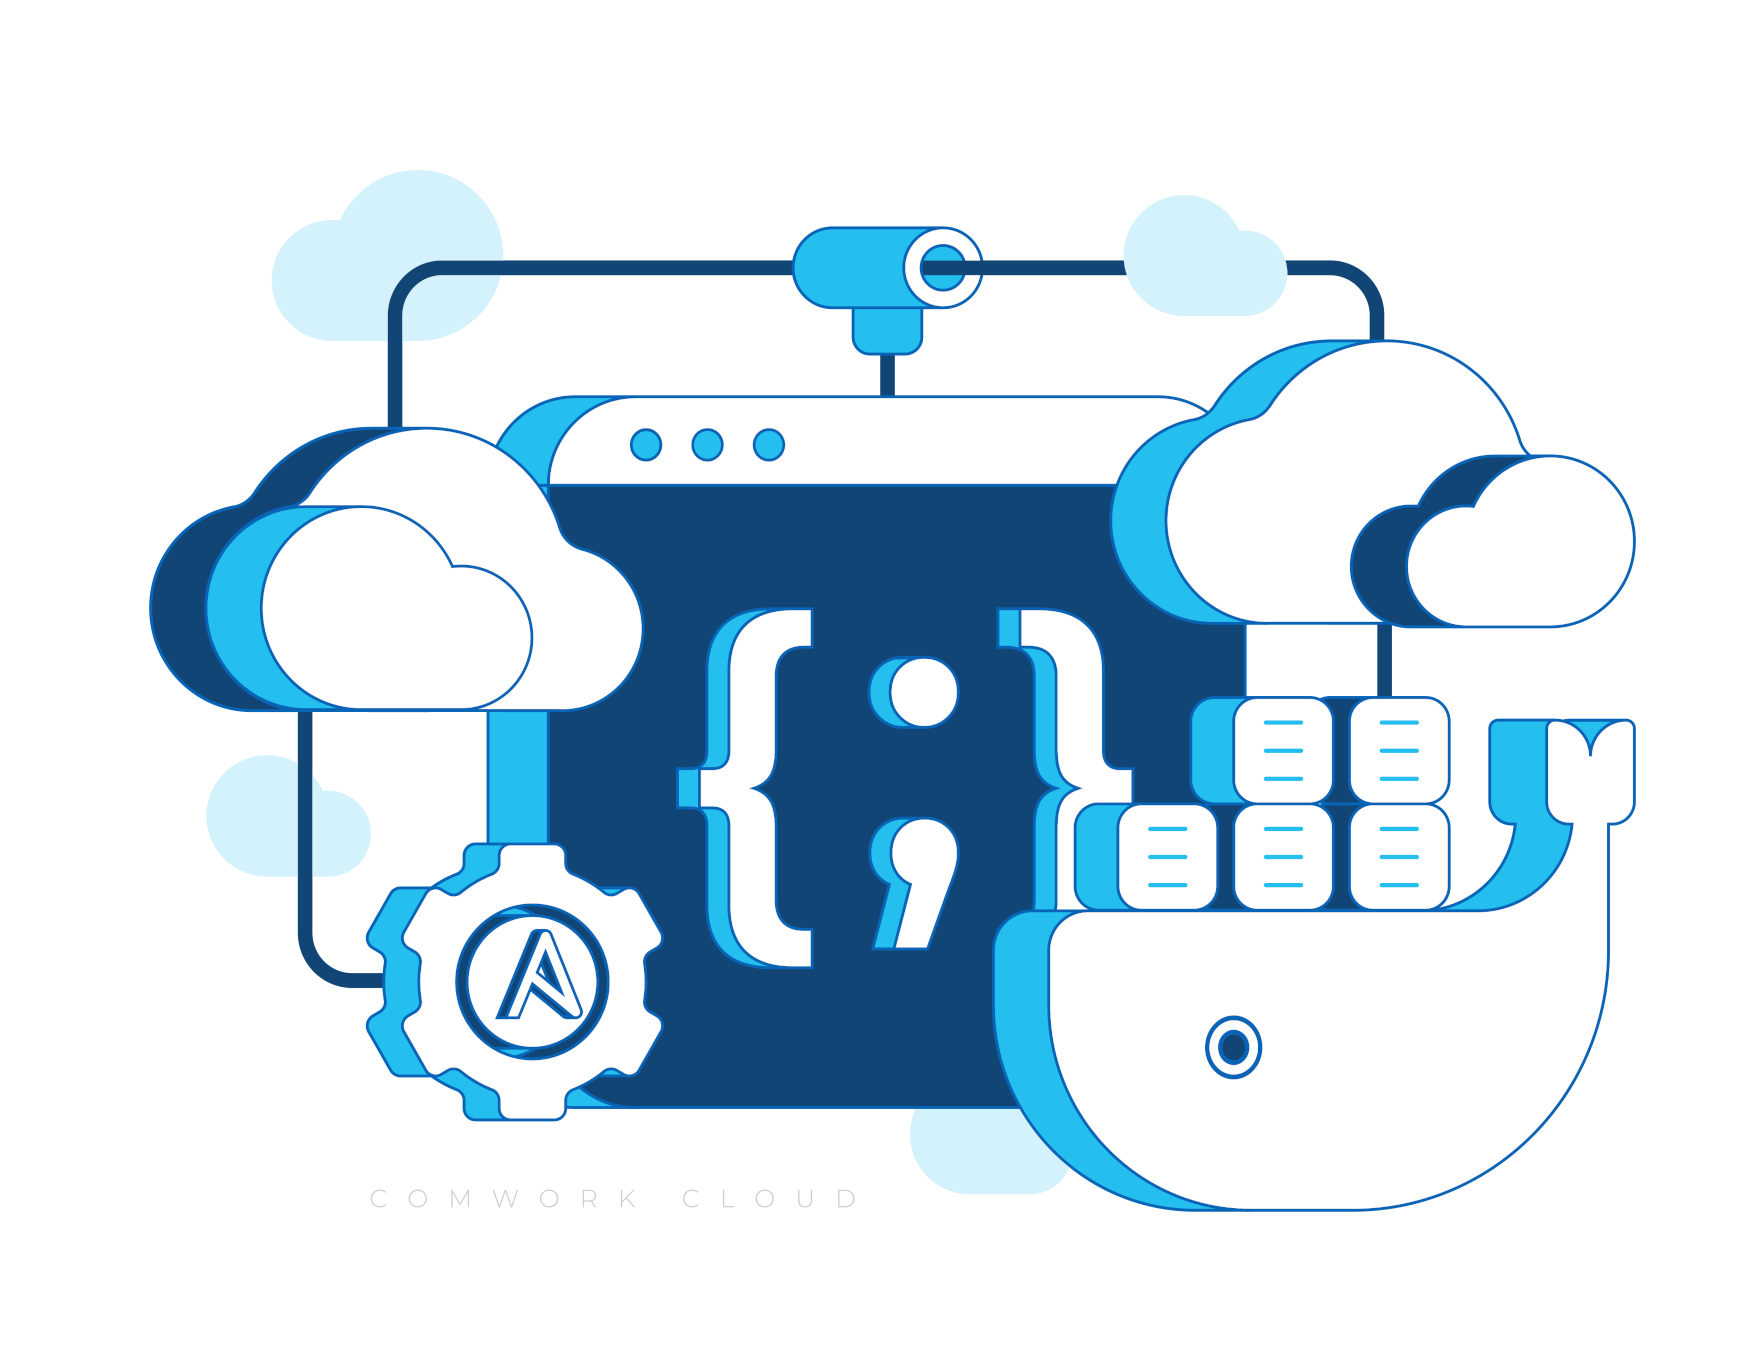 Comwork Cloud community edition